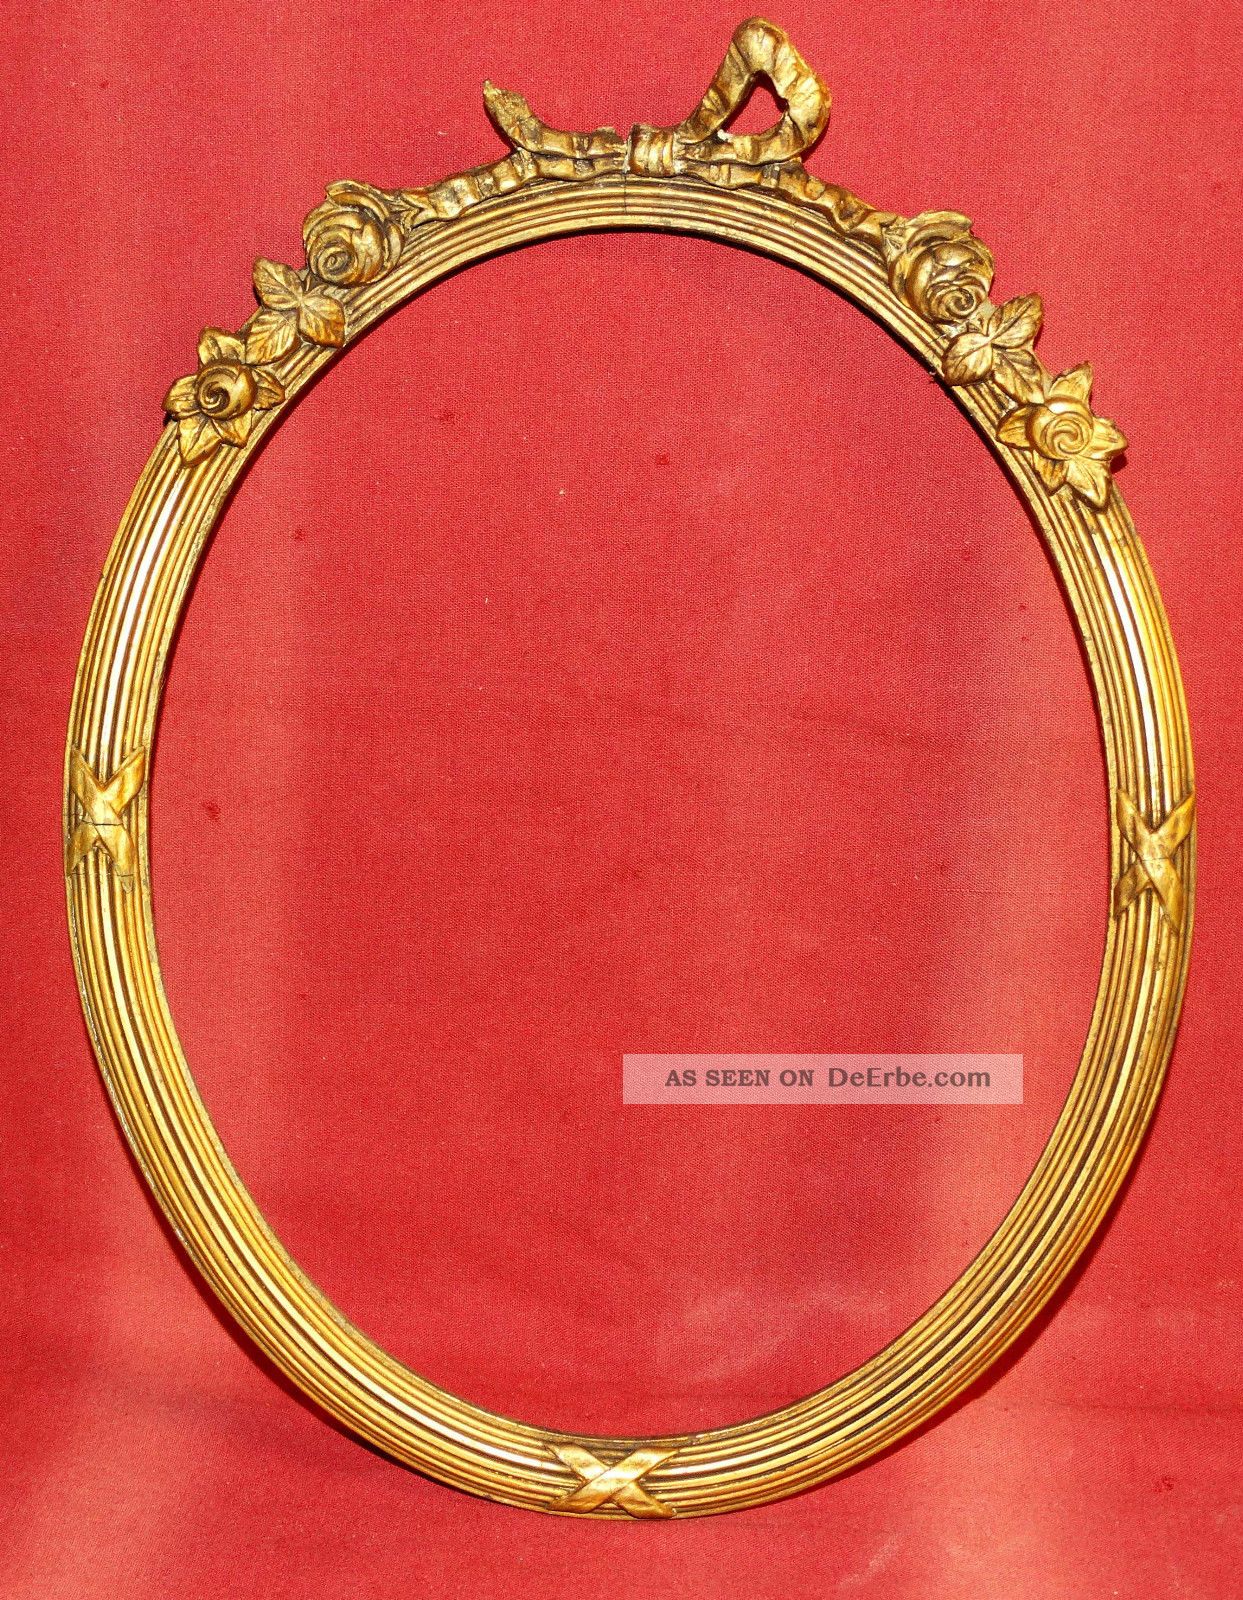 1900 Antiker Prunk Gold Holzrahmen 30 X 24 Bilderrahmen Goldverziert Barock Rahmen Bild